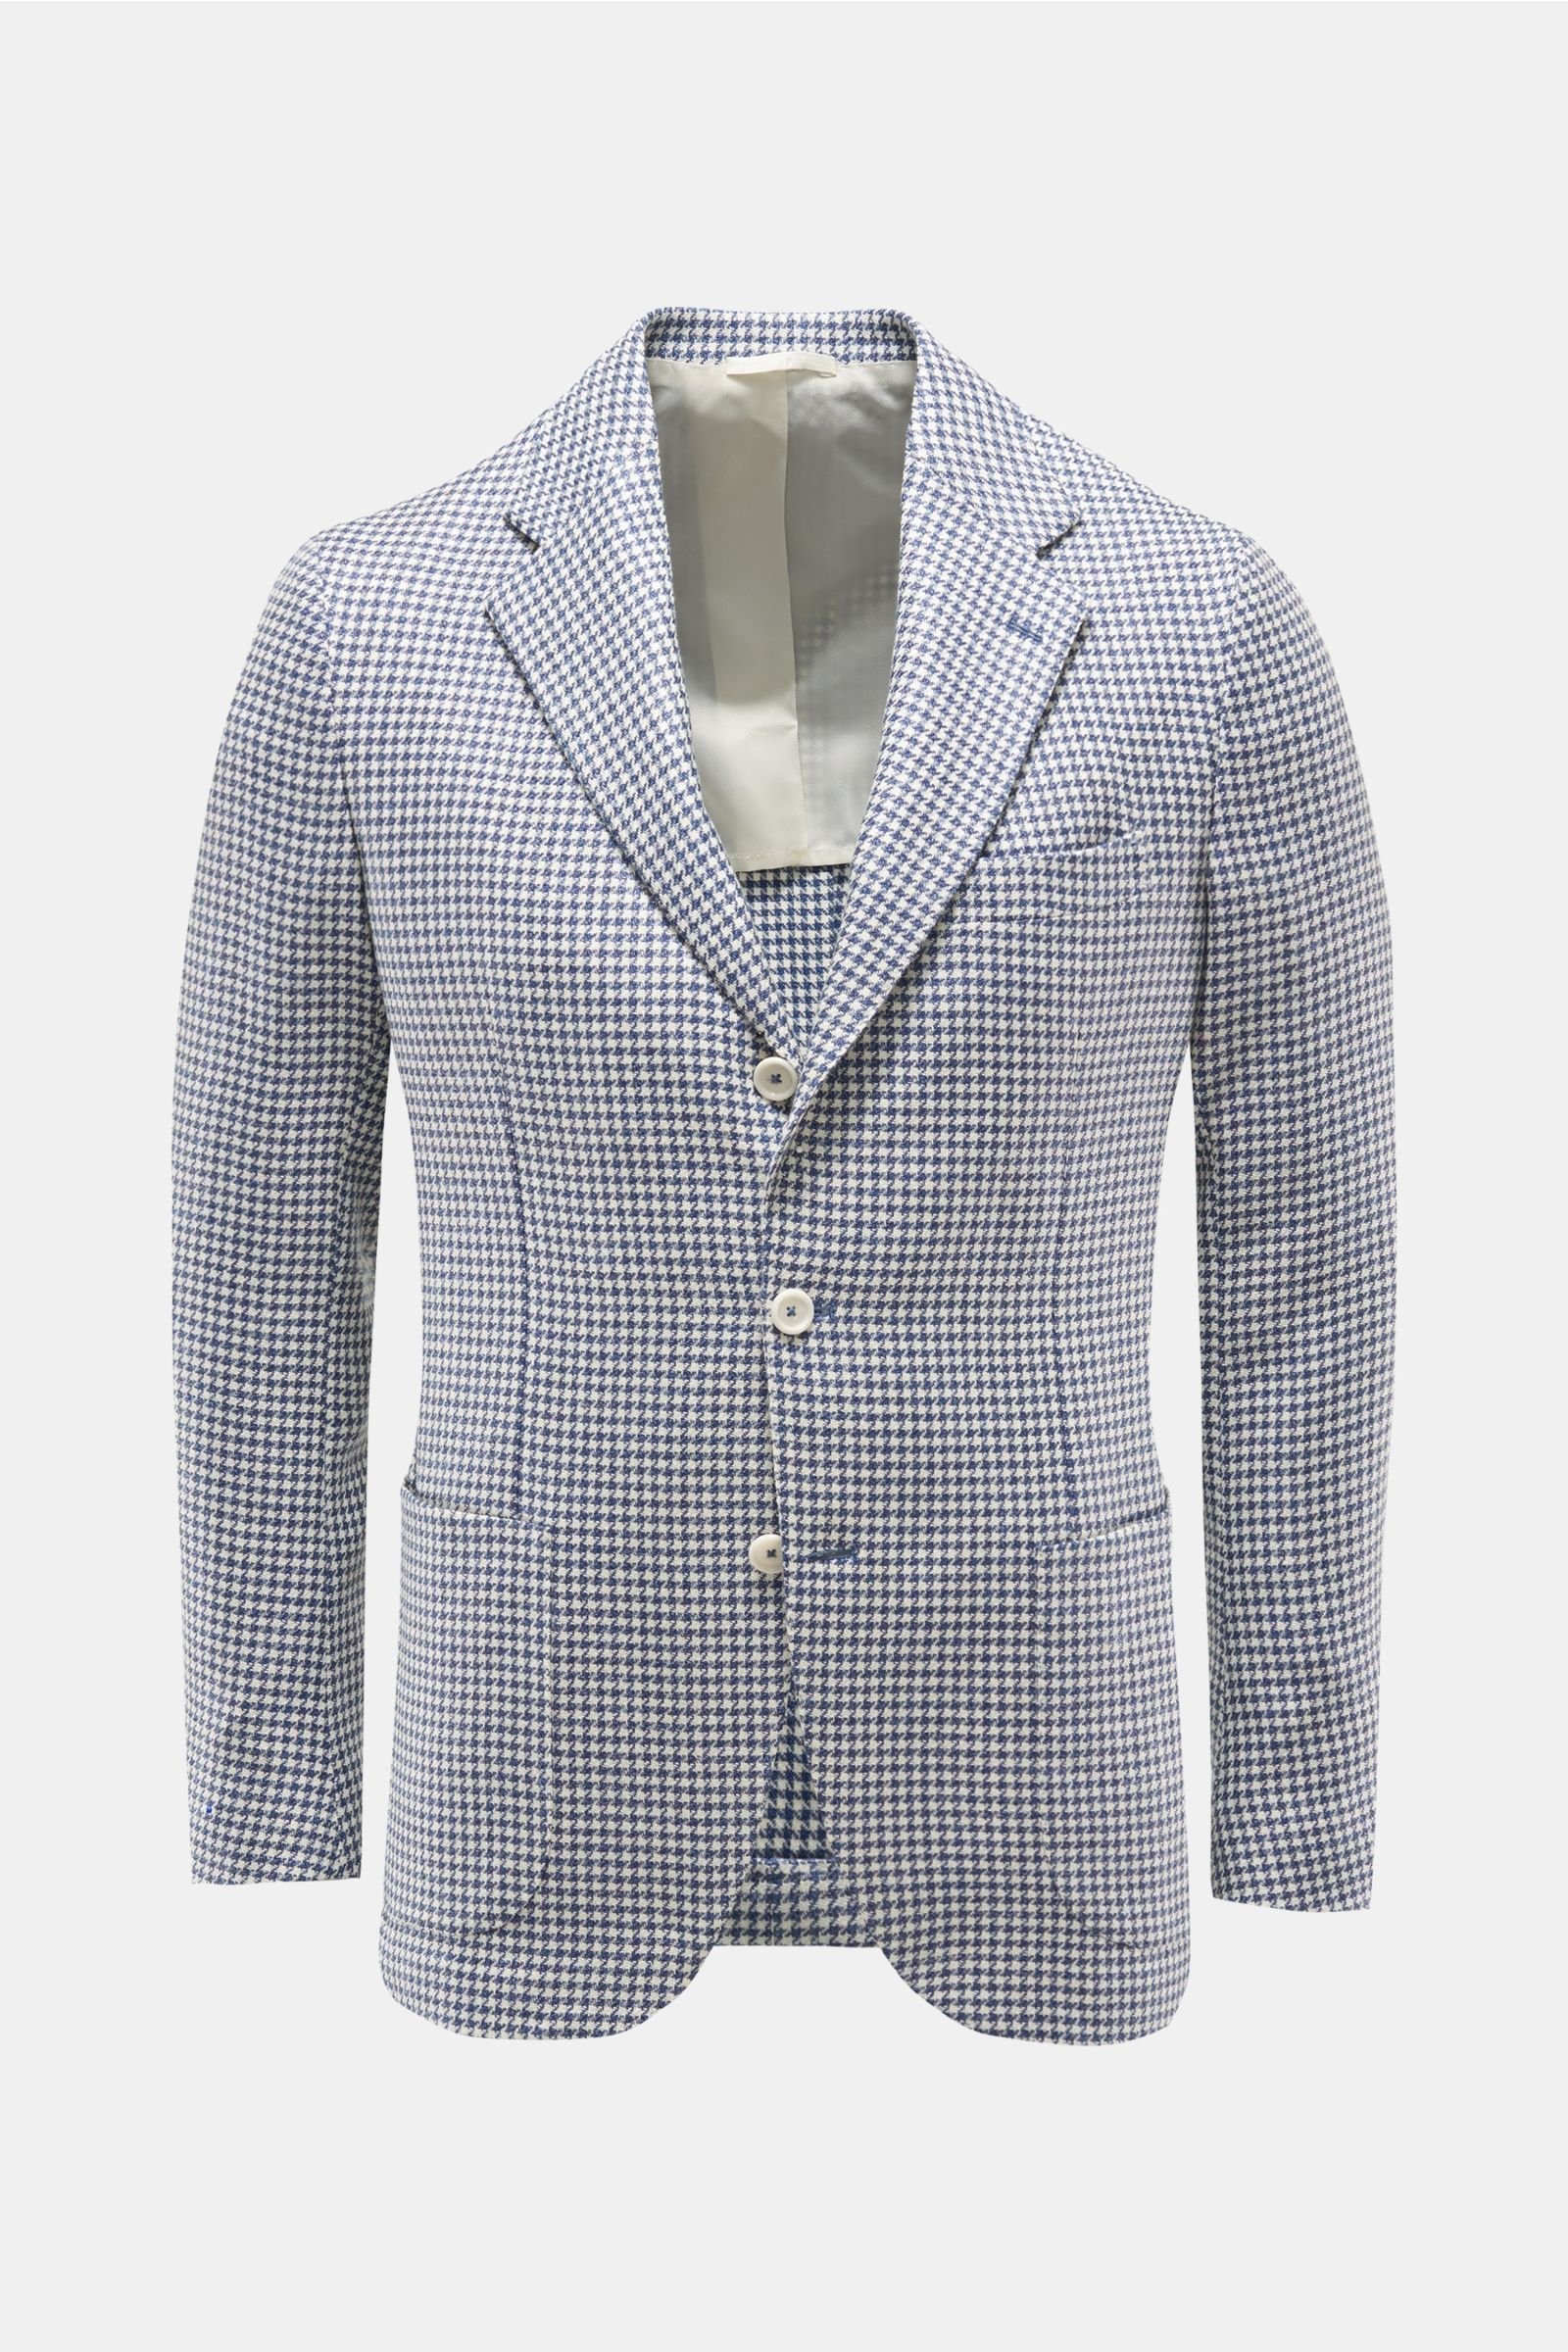 Smart-casual jacket 'Posillipo' grey-blue/white checked